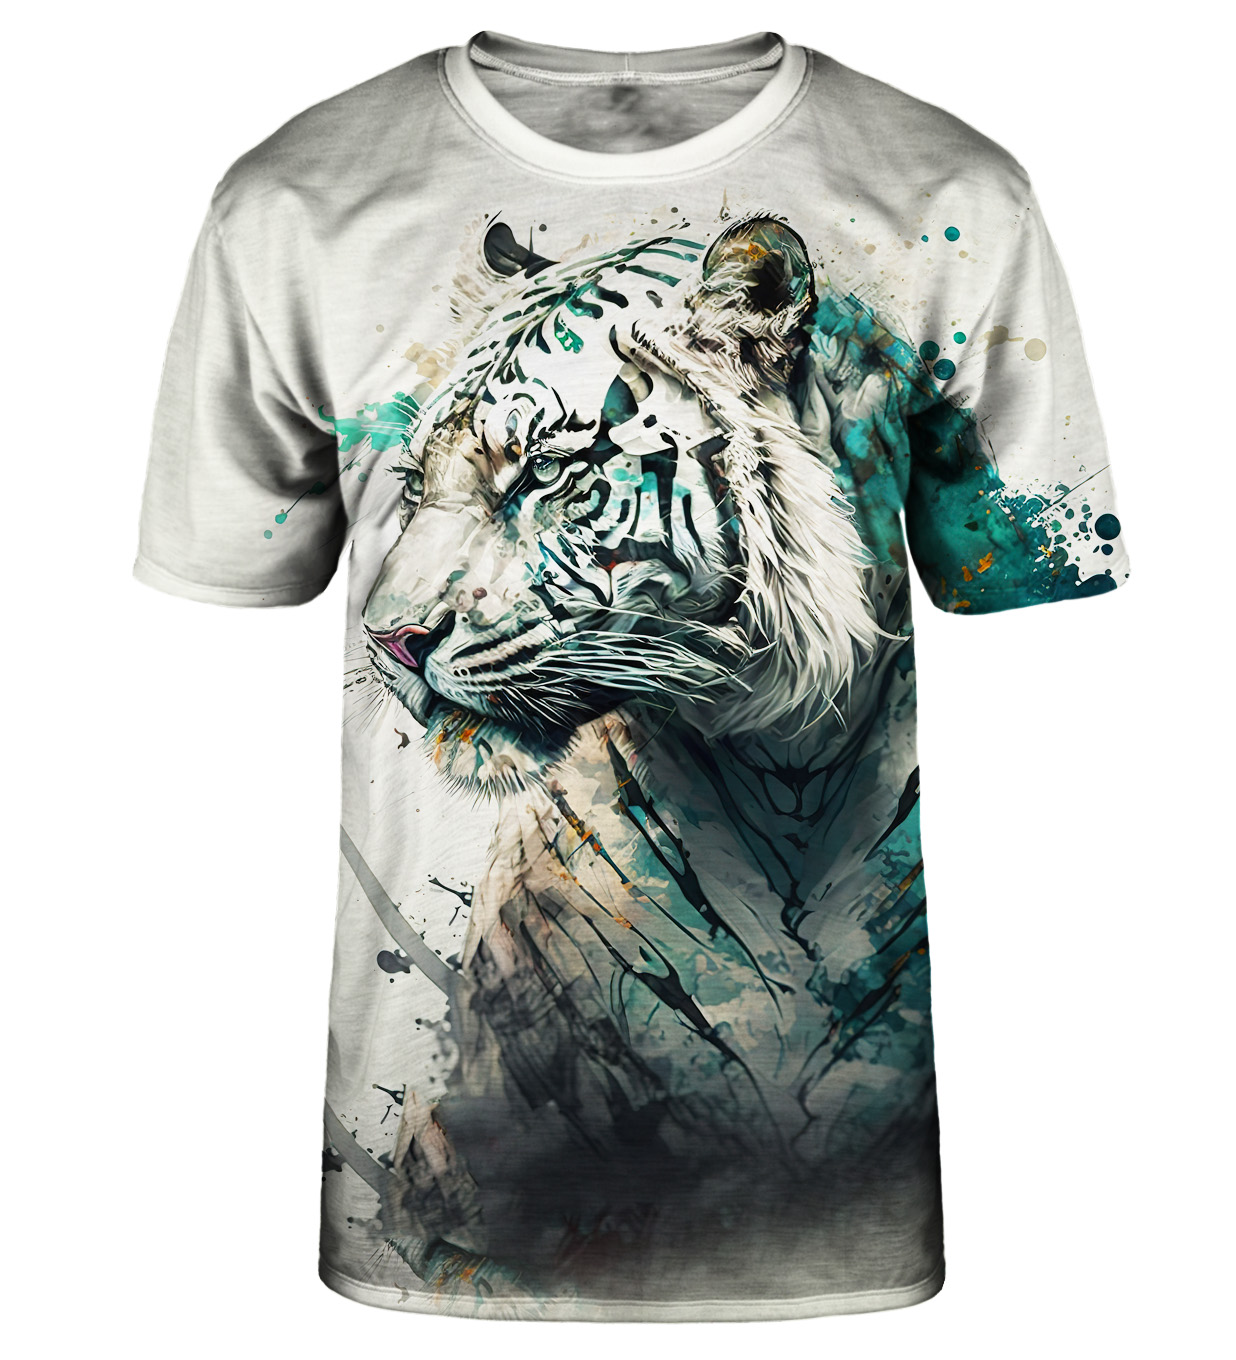 Watercolor Tiger T-shirt - S